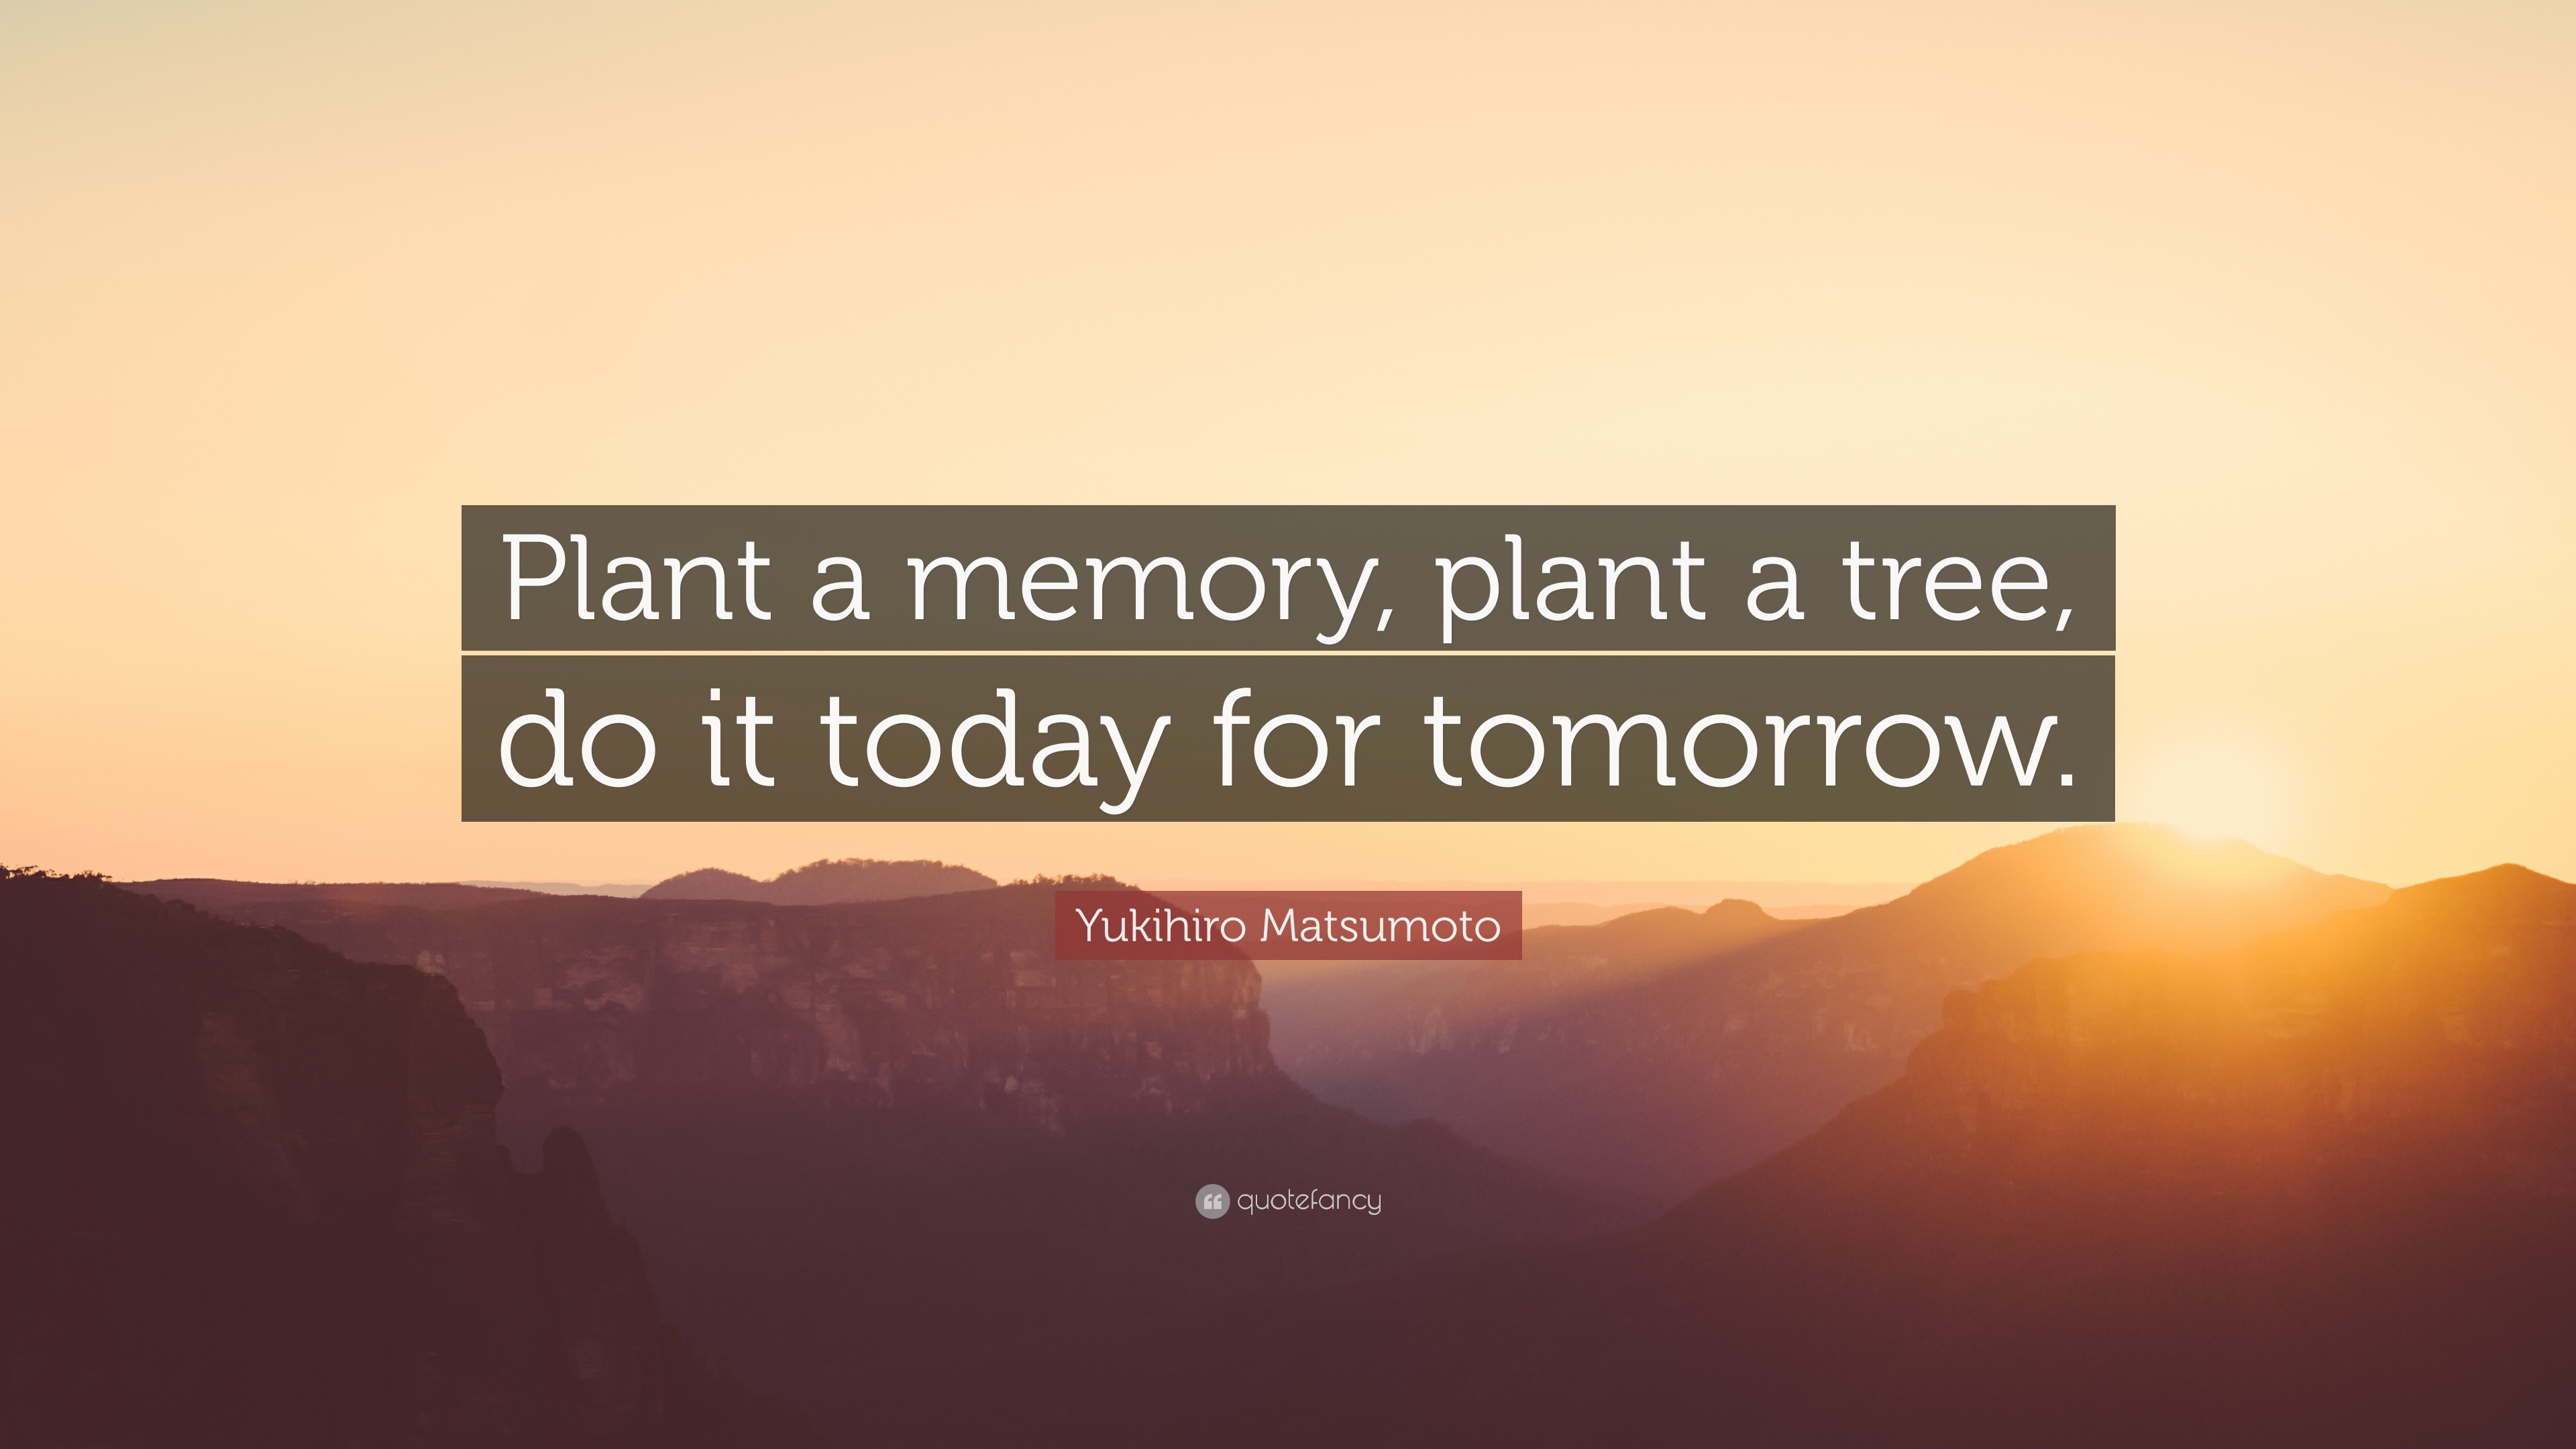 Yukihiro Matsumoto Quote: “Plant A Memory, Plant A Tree, Do It Today For Tomorrow.”